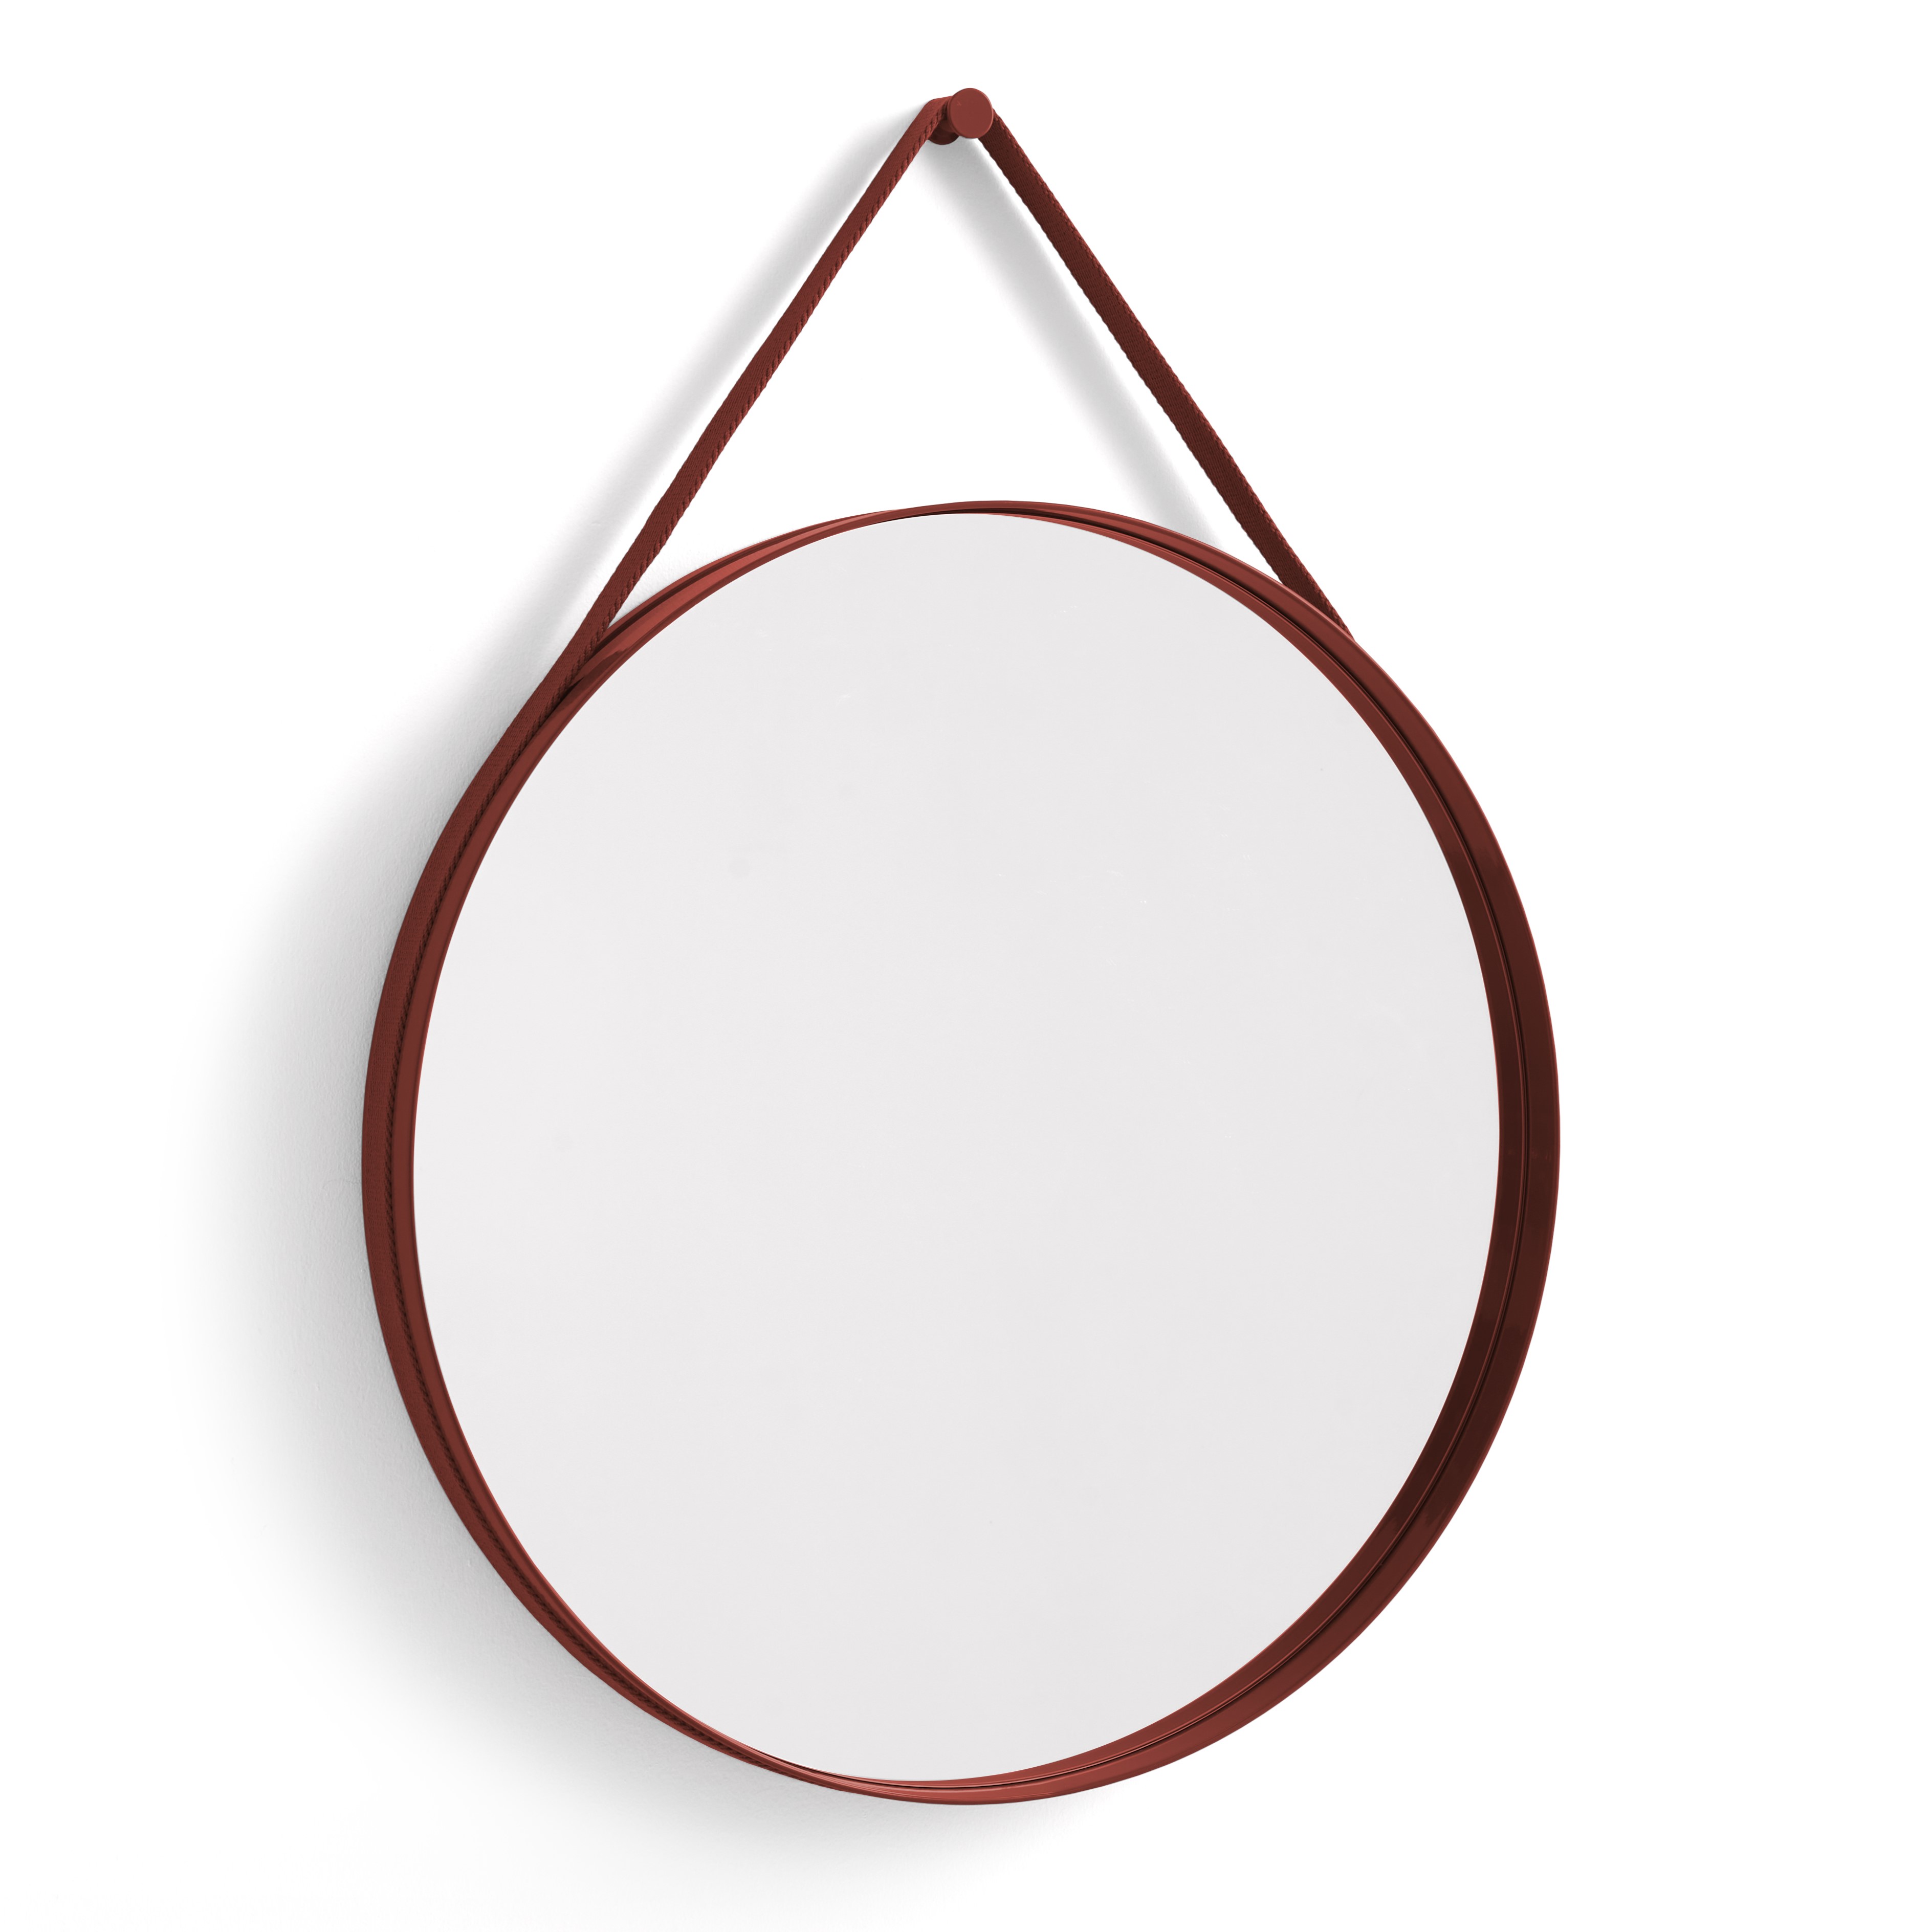 Strap mirror 70 cm - Red